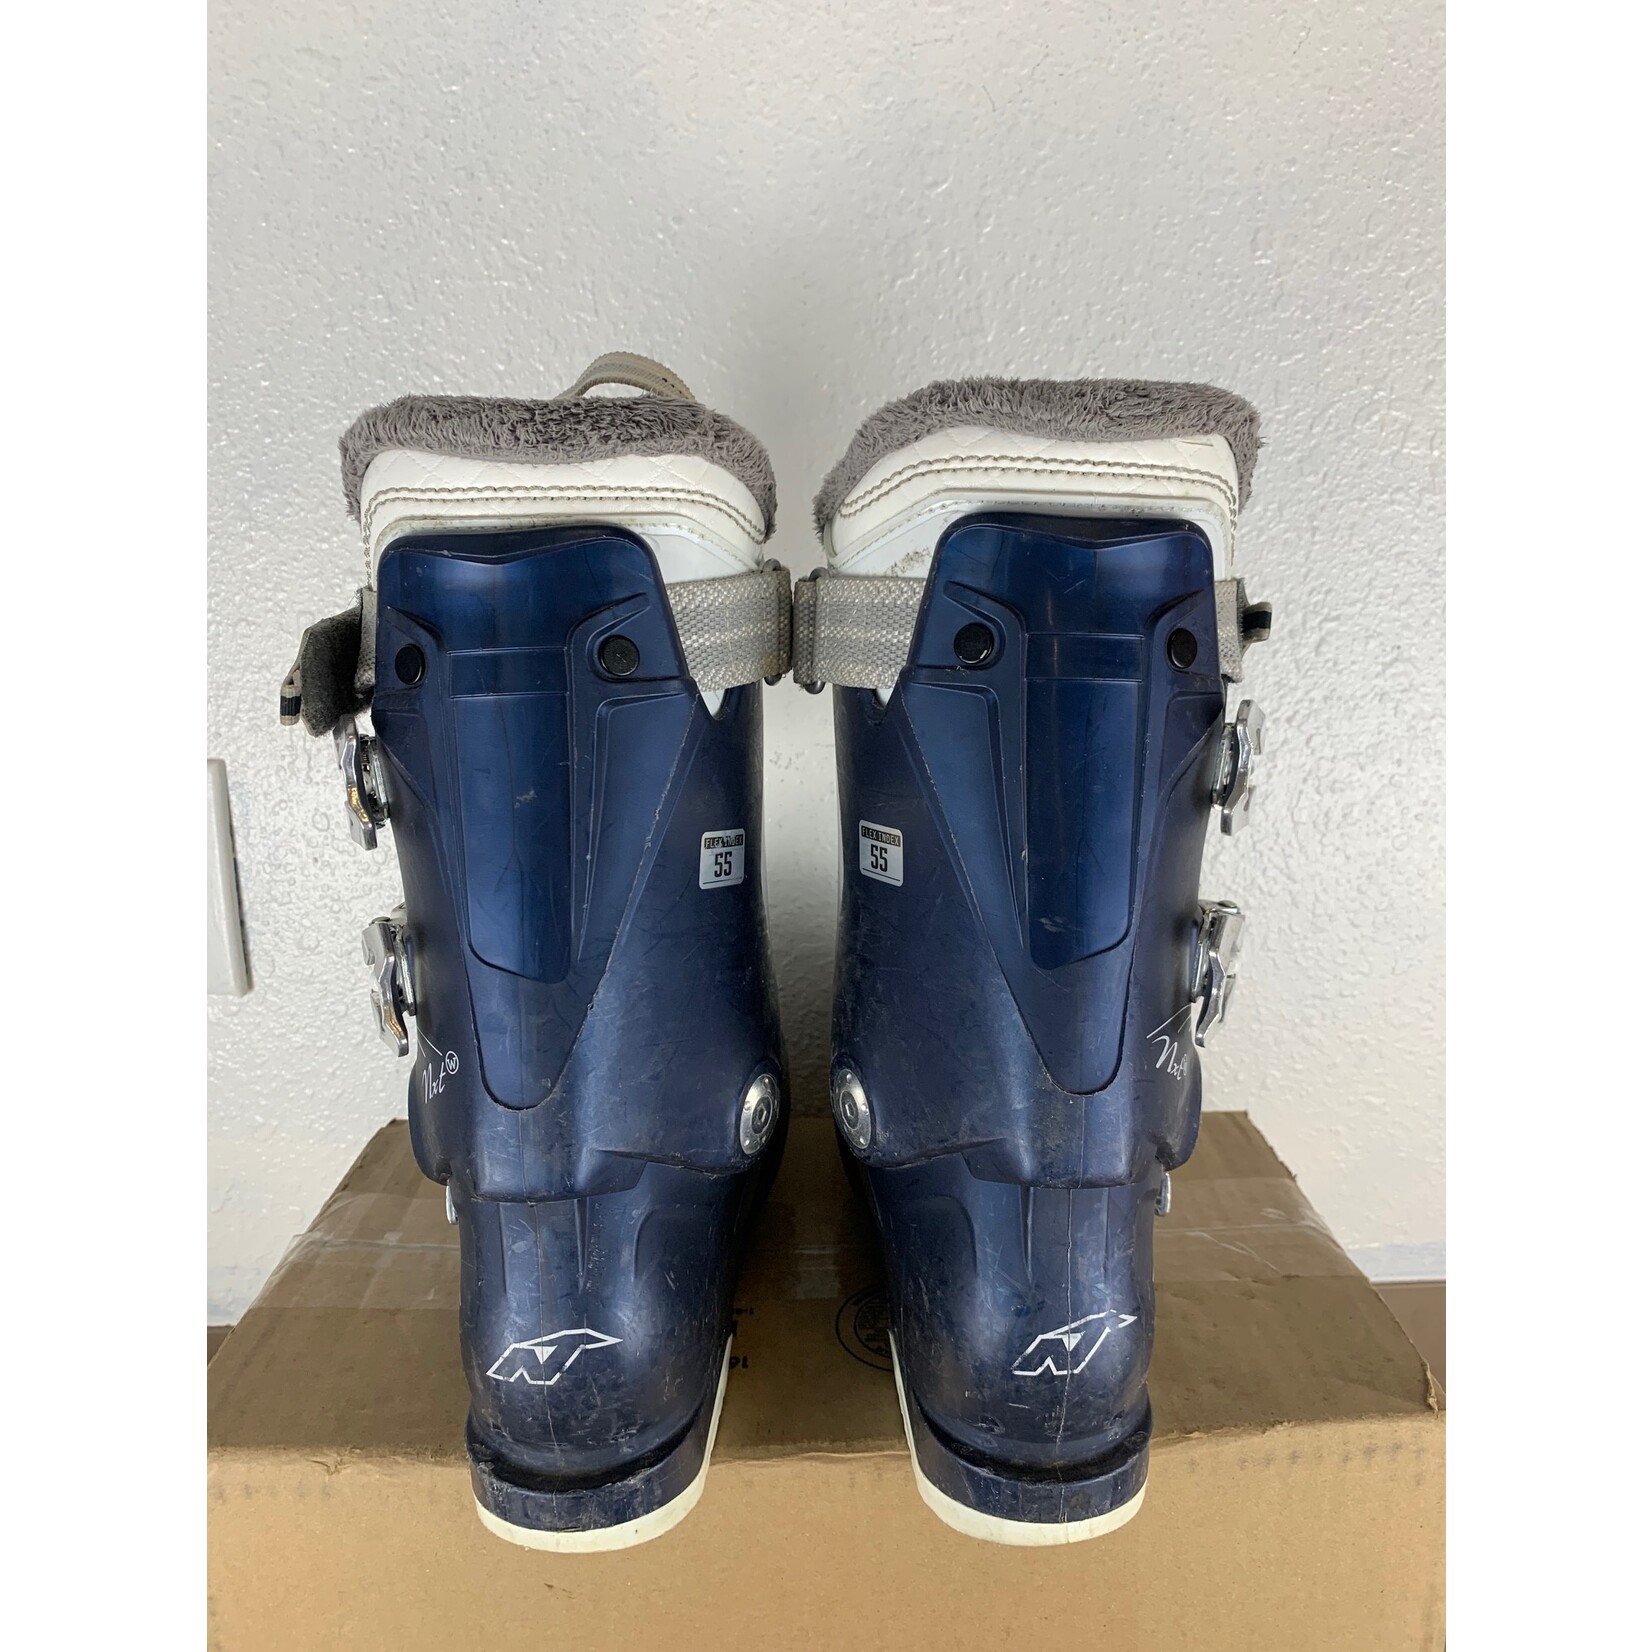 Nordica Nordica NXT N5W Ski Boots, Size 23/23.5